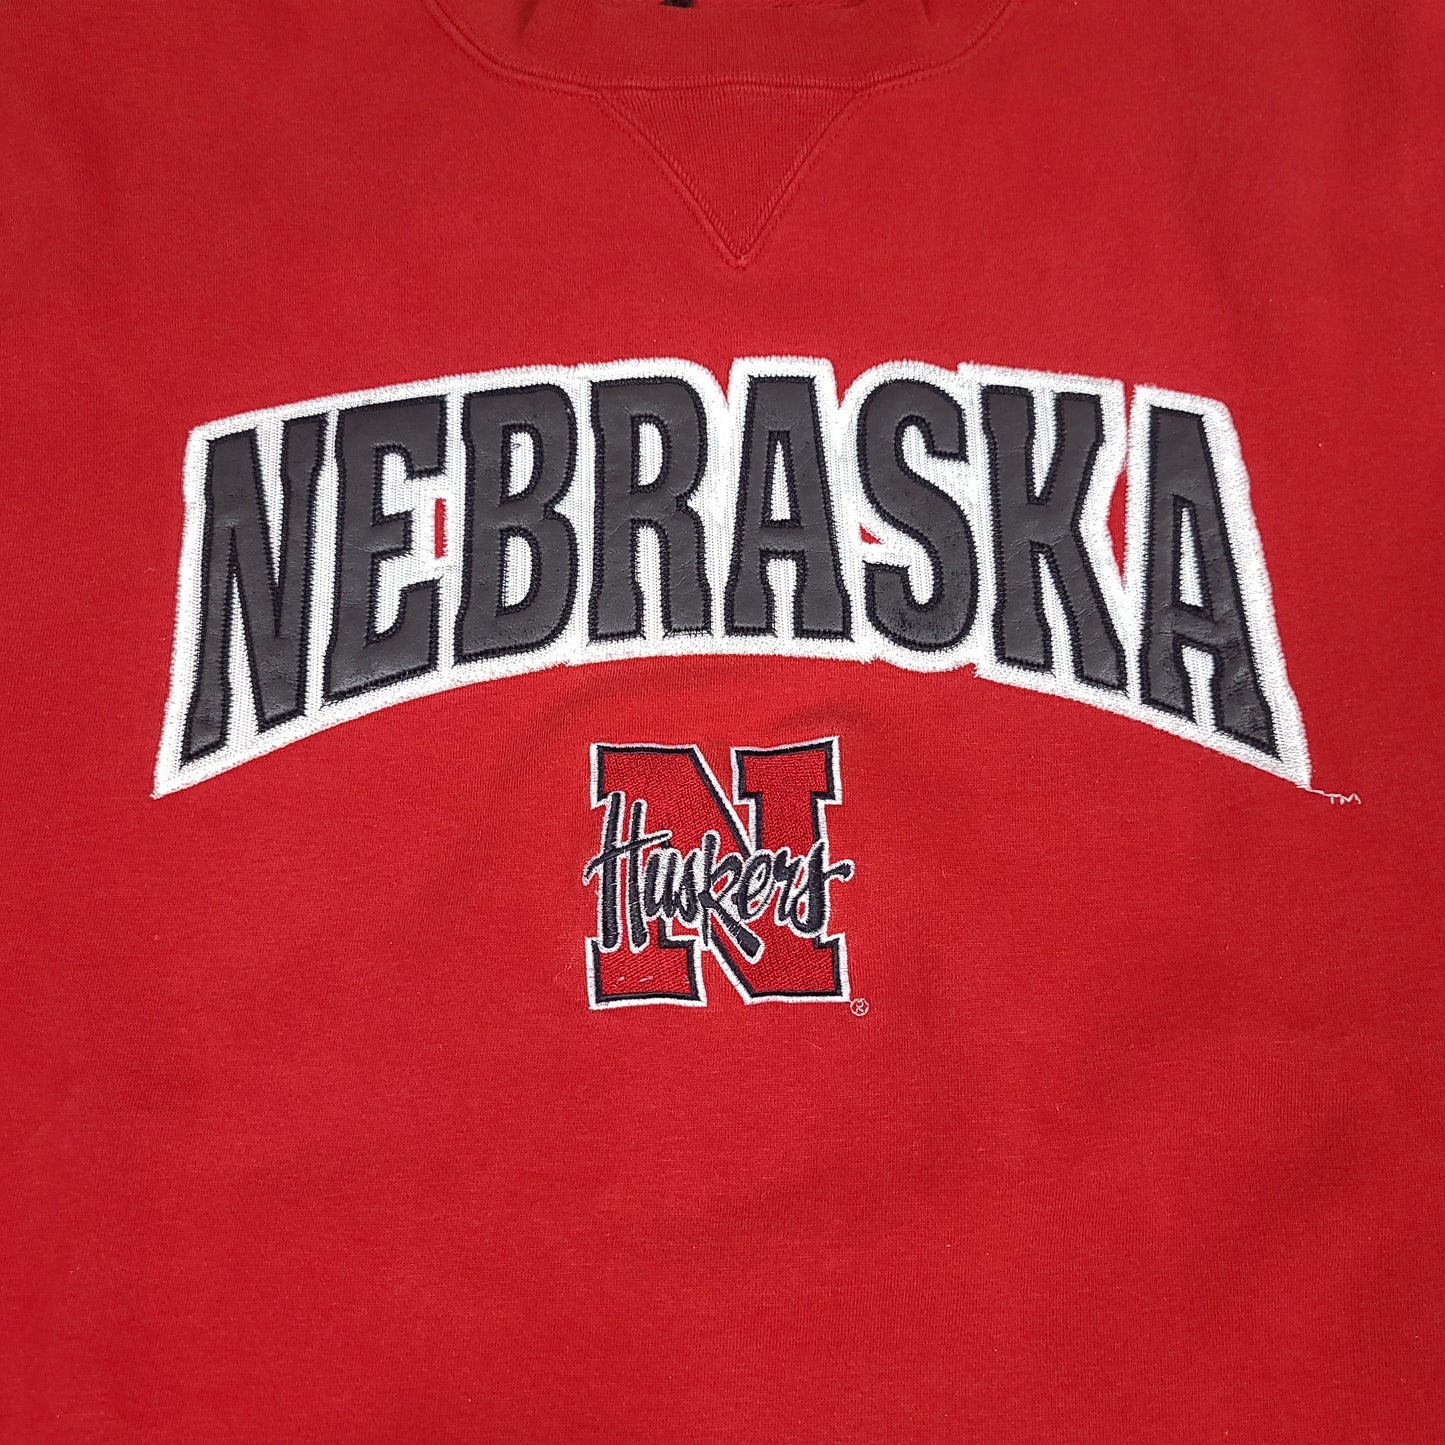 Vintage University of Nebraska adidas Red Sweatshirt